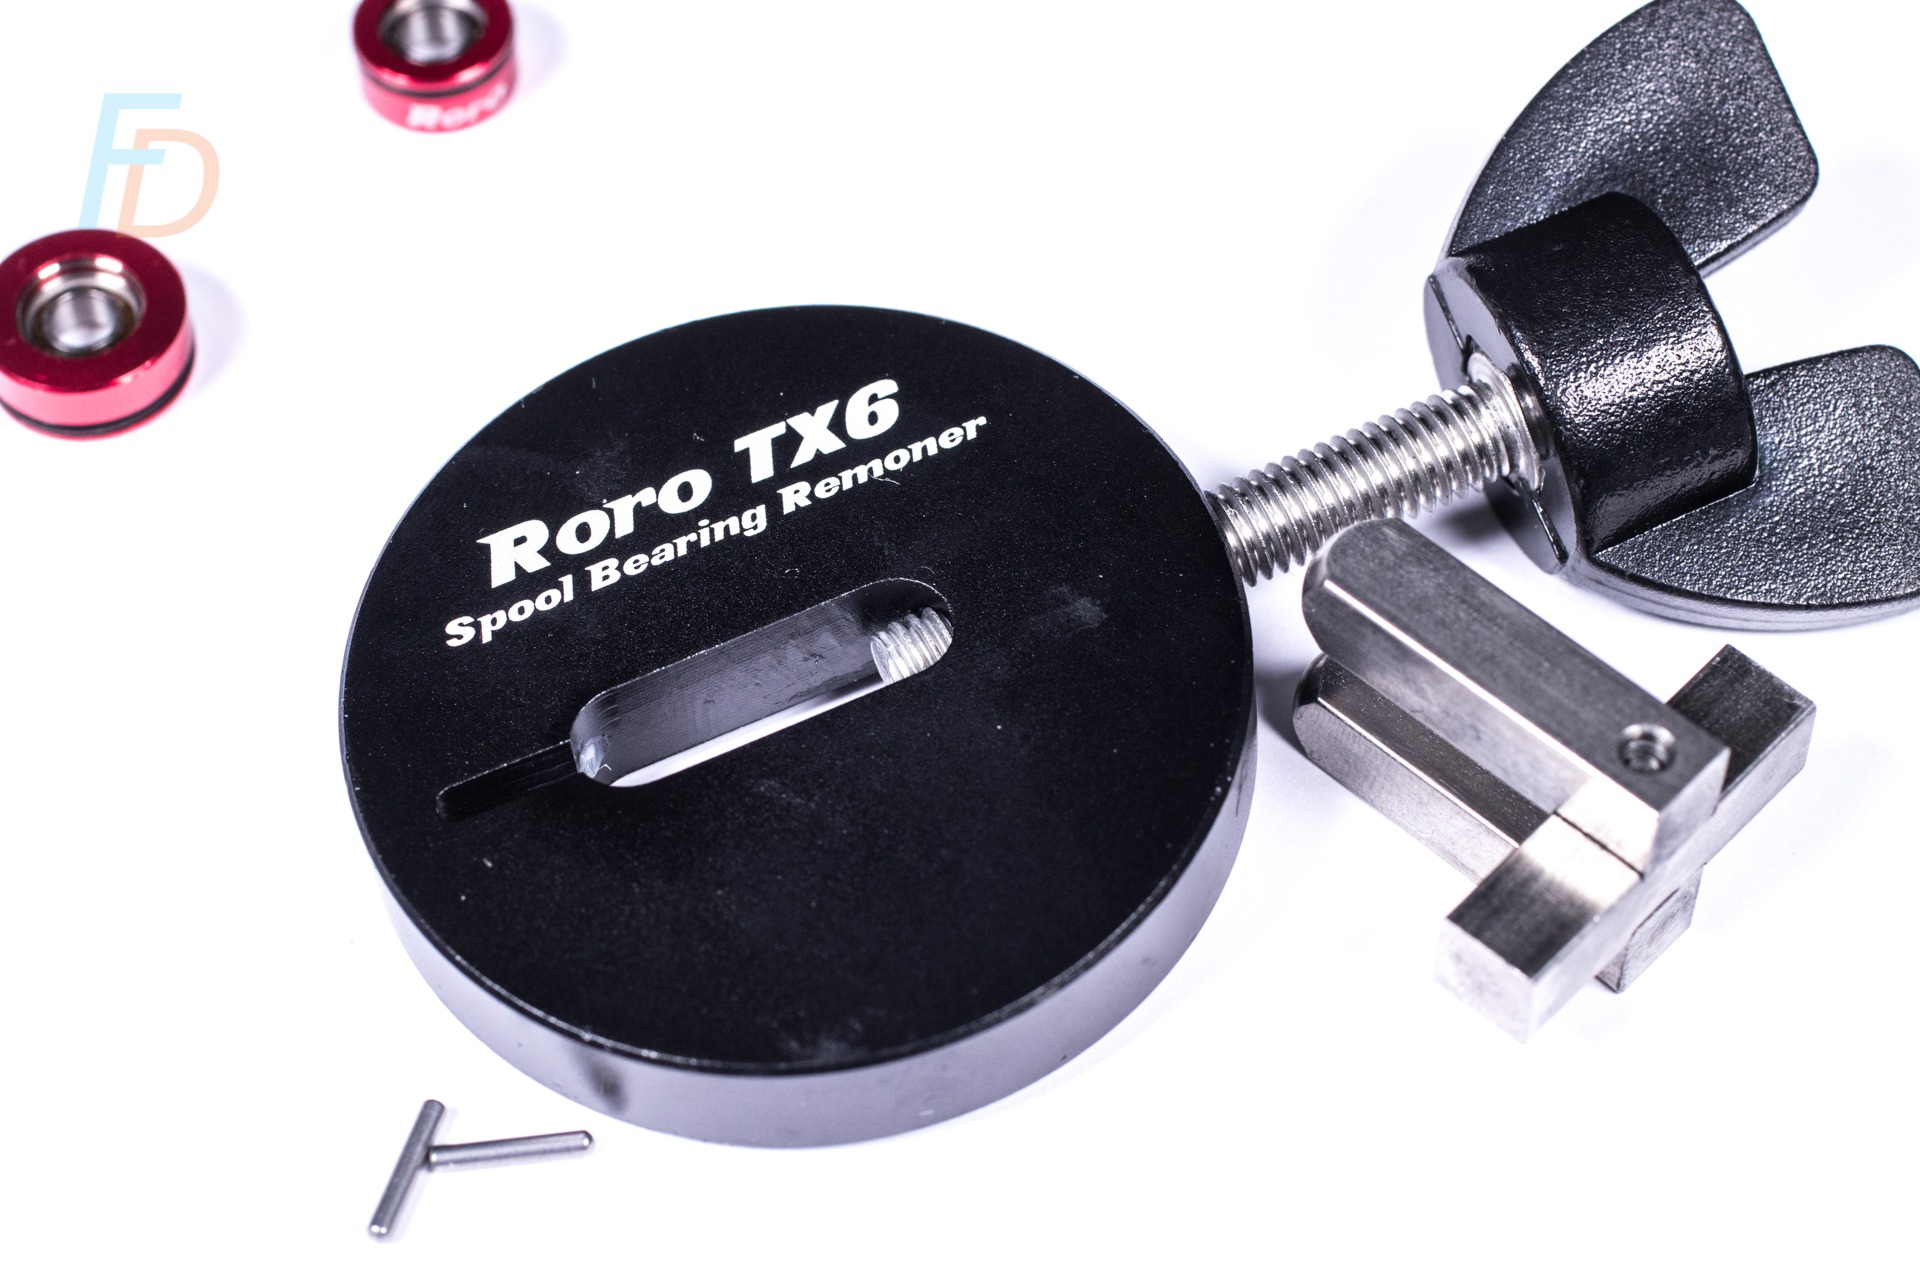 BFS spool bearing pin removal tool from roro TX-6